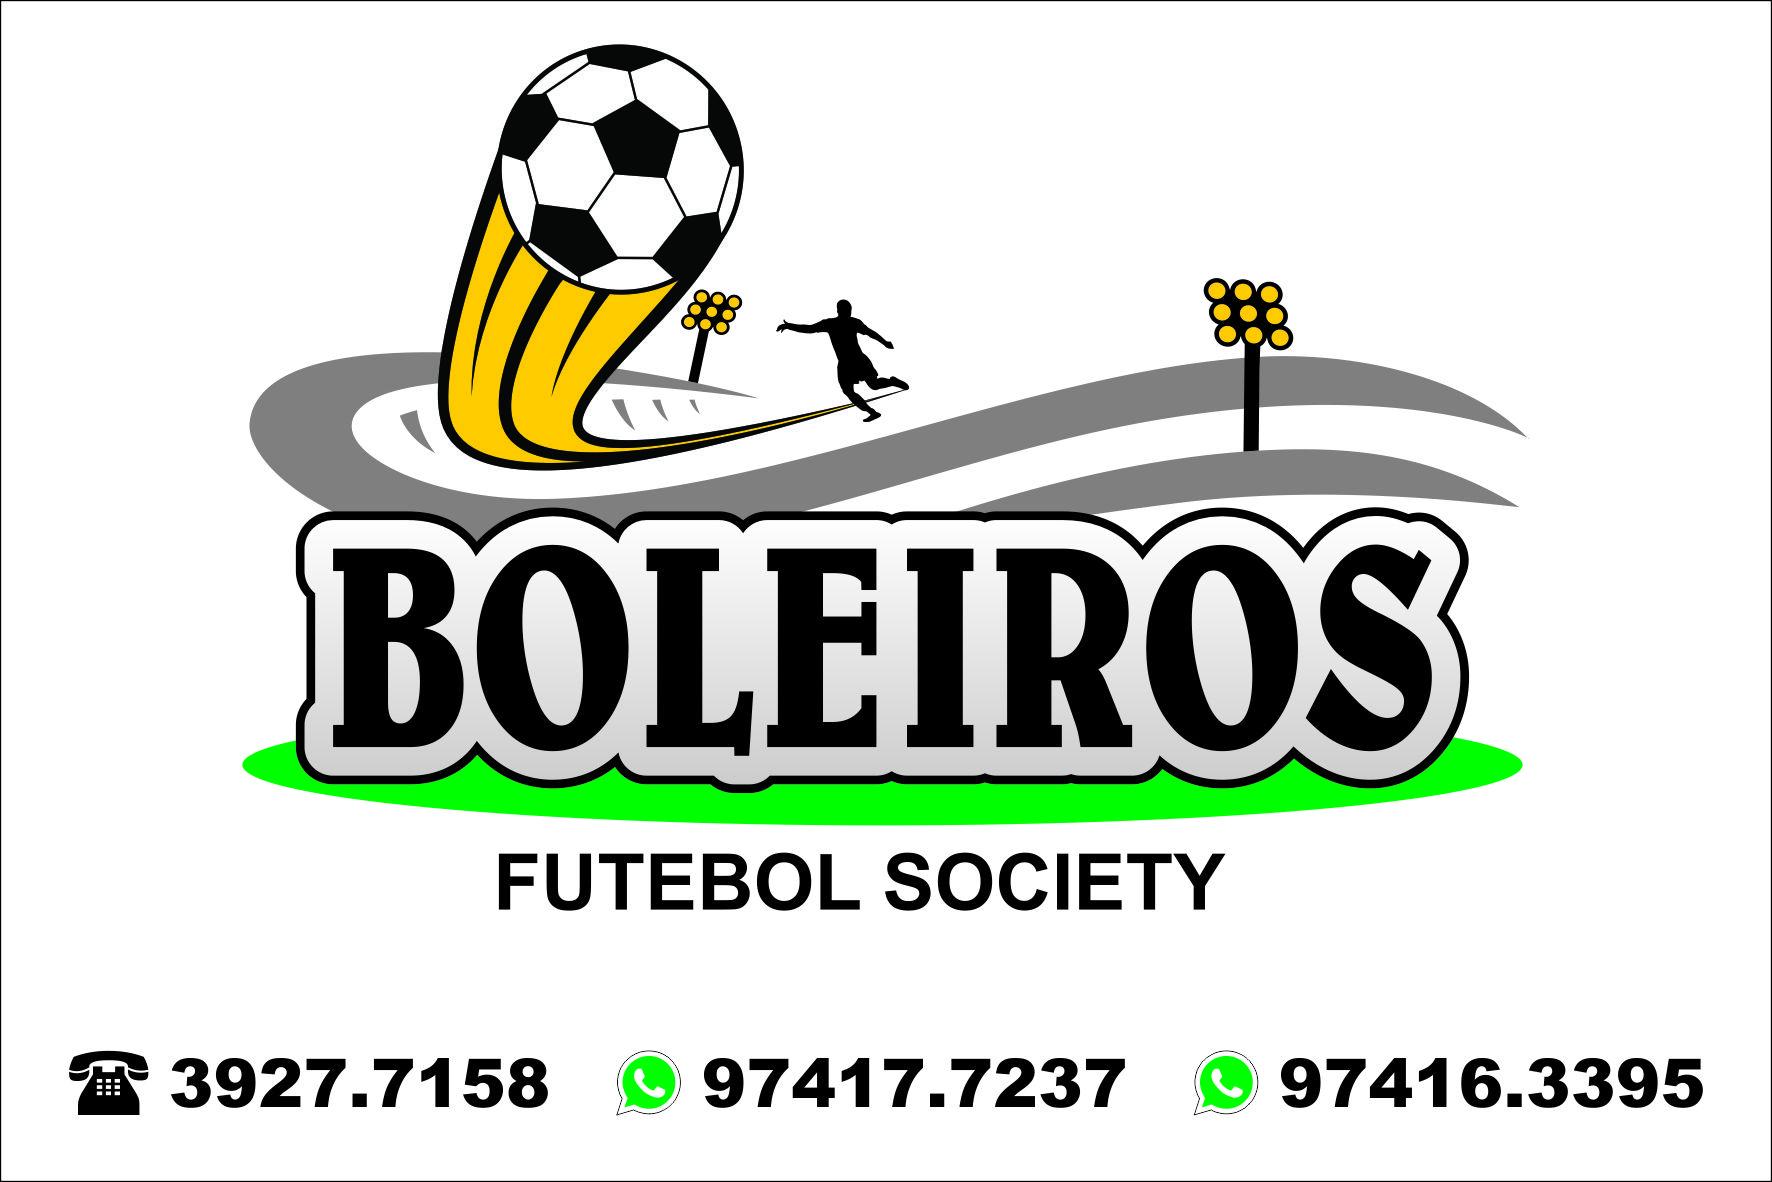 Boleiros Futebol Society 